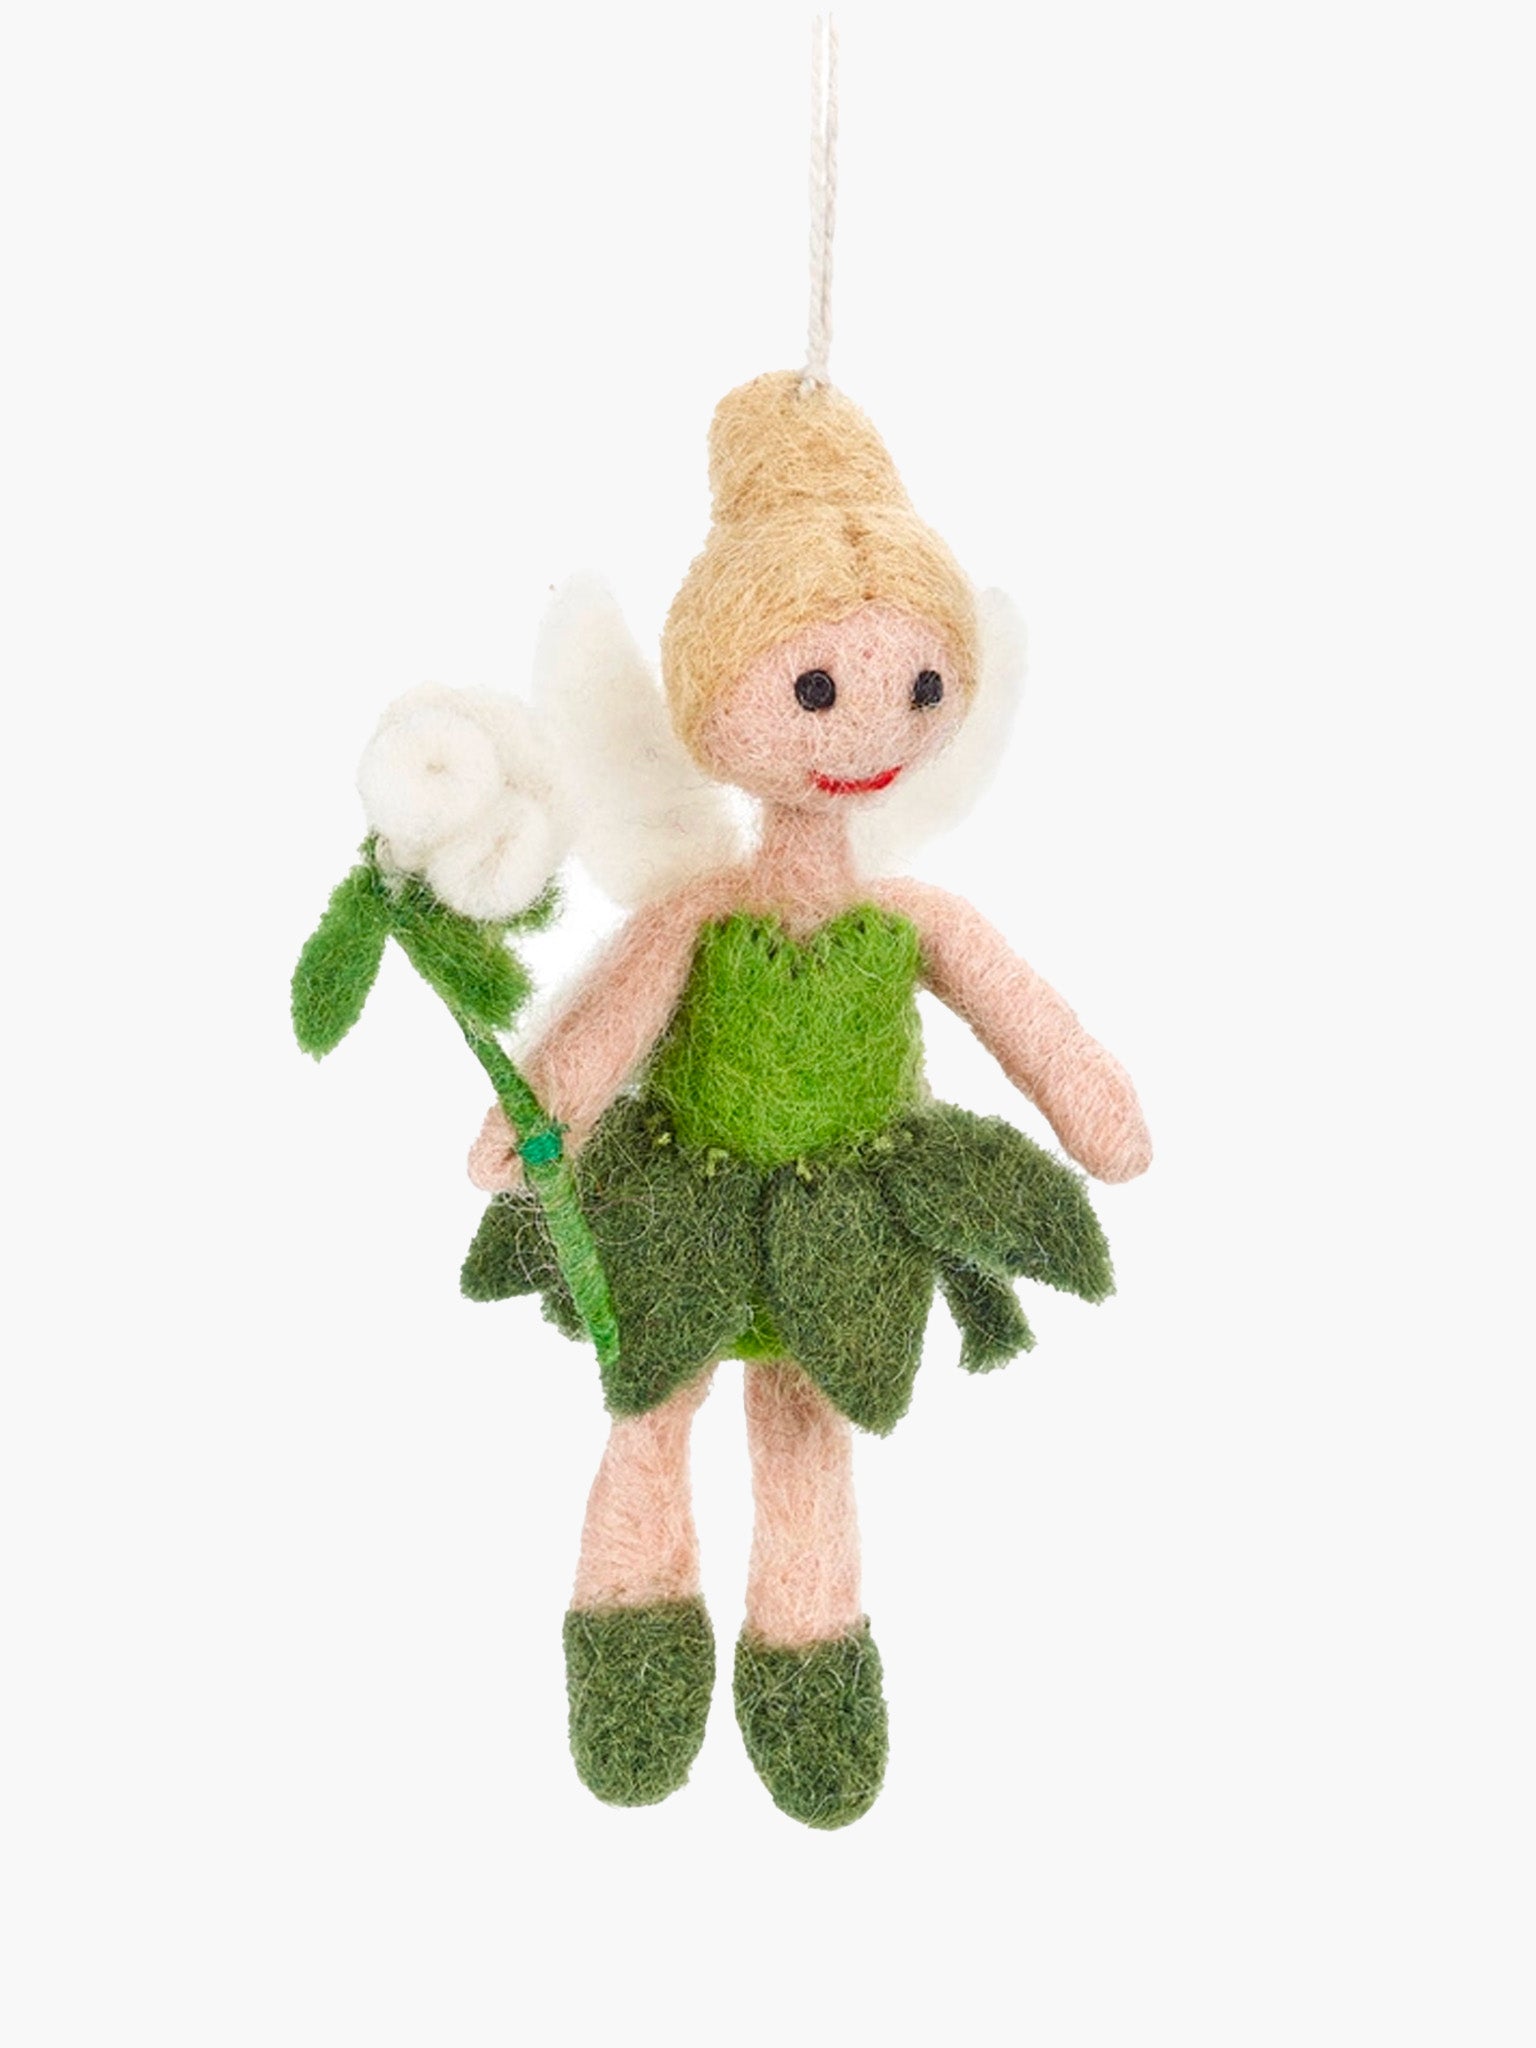 Trixie the Garden Fairy Ornament